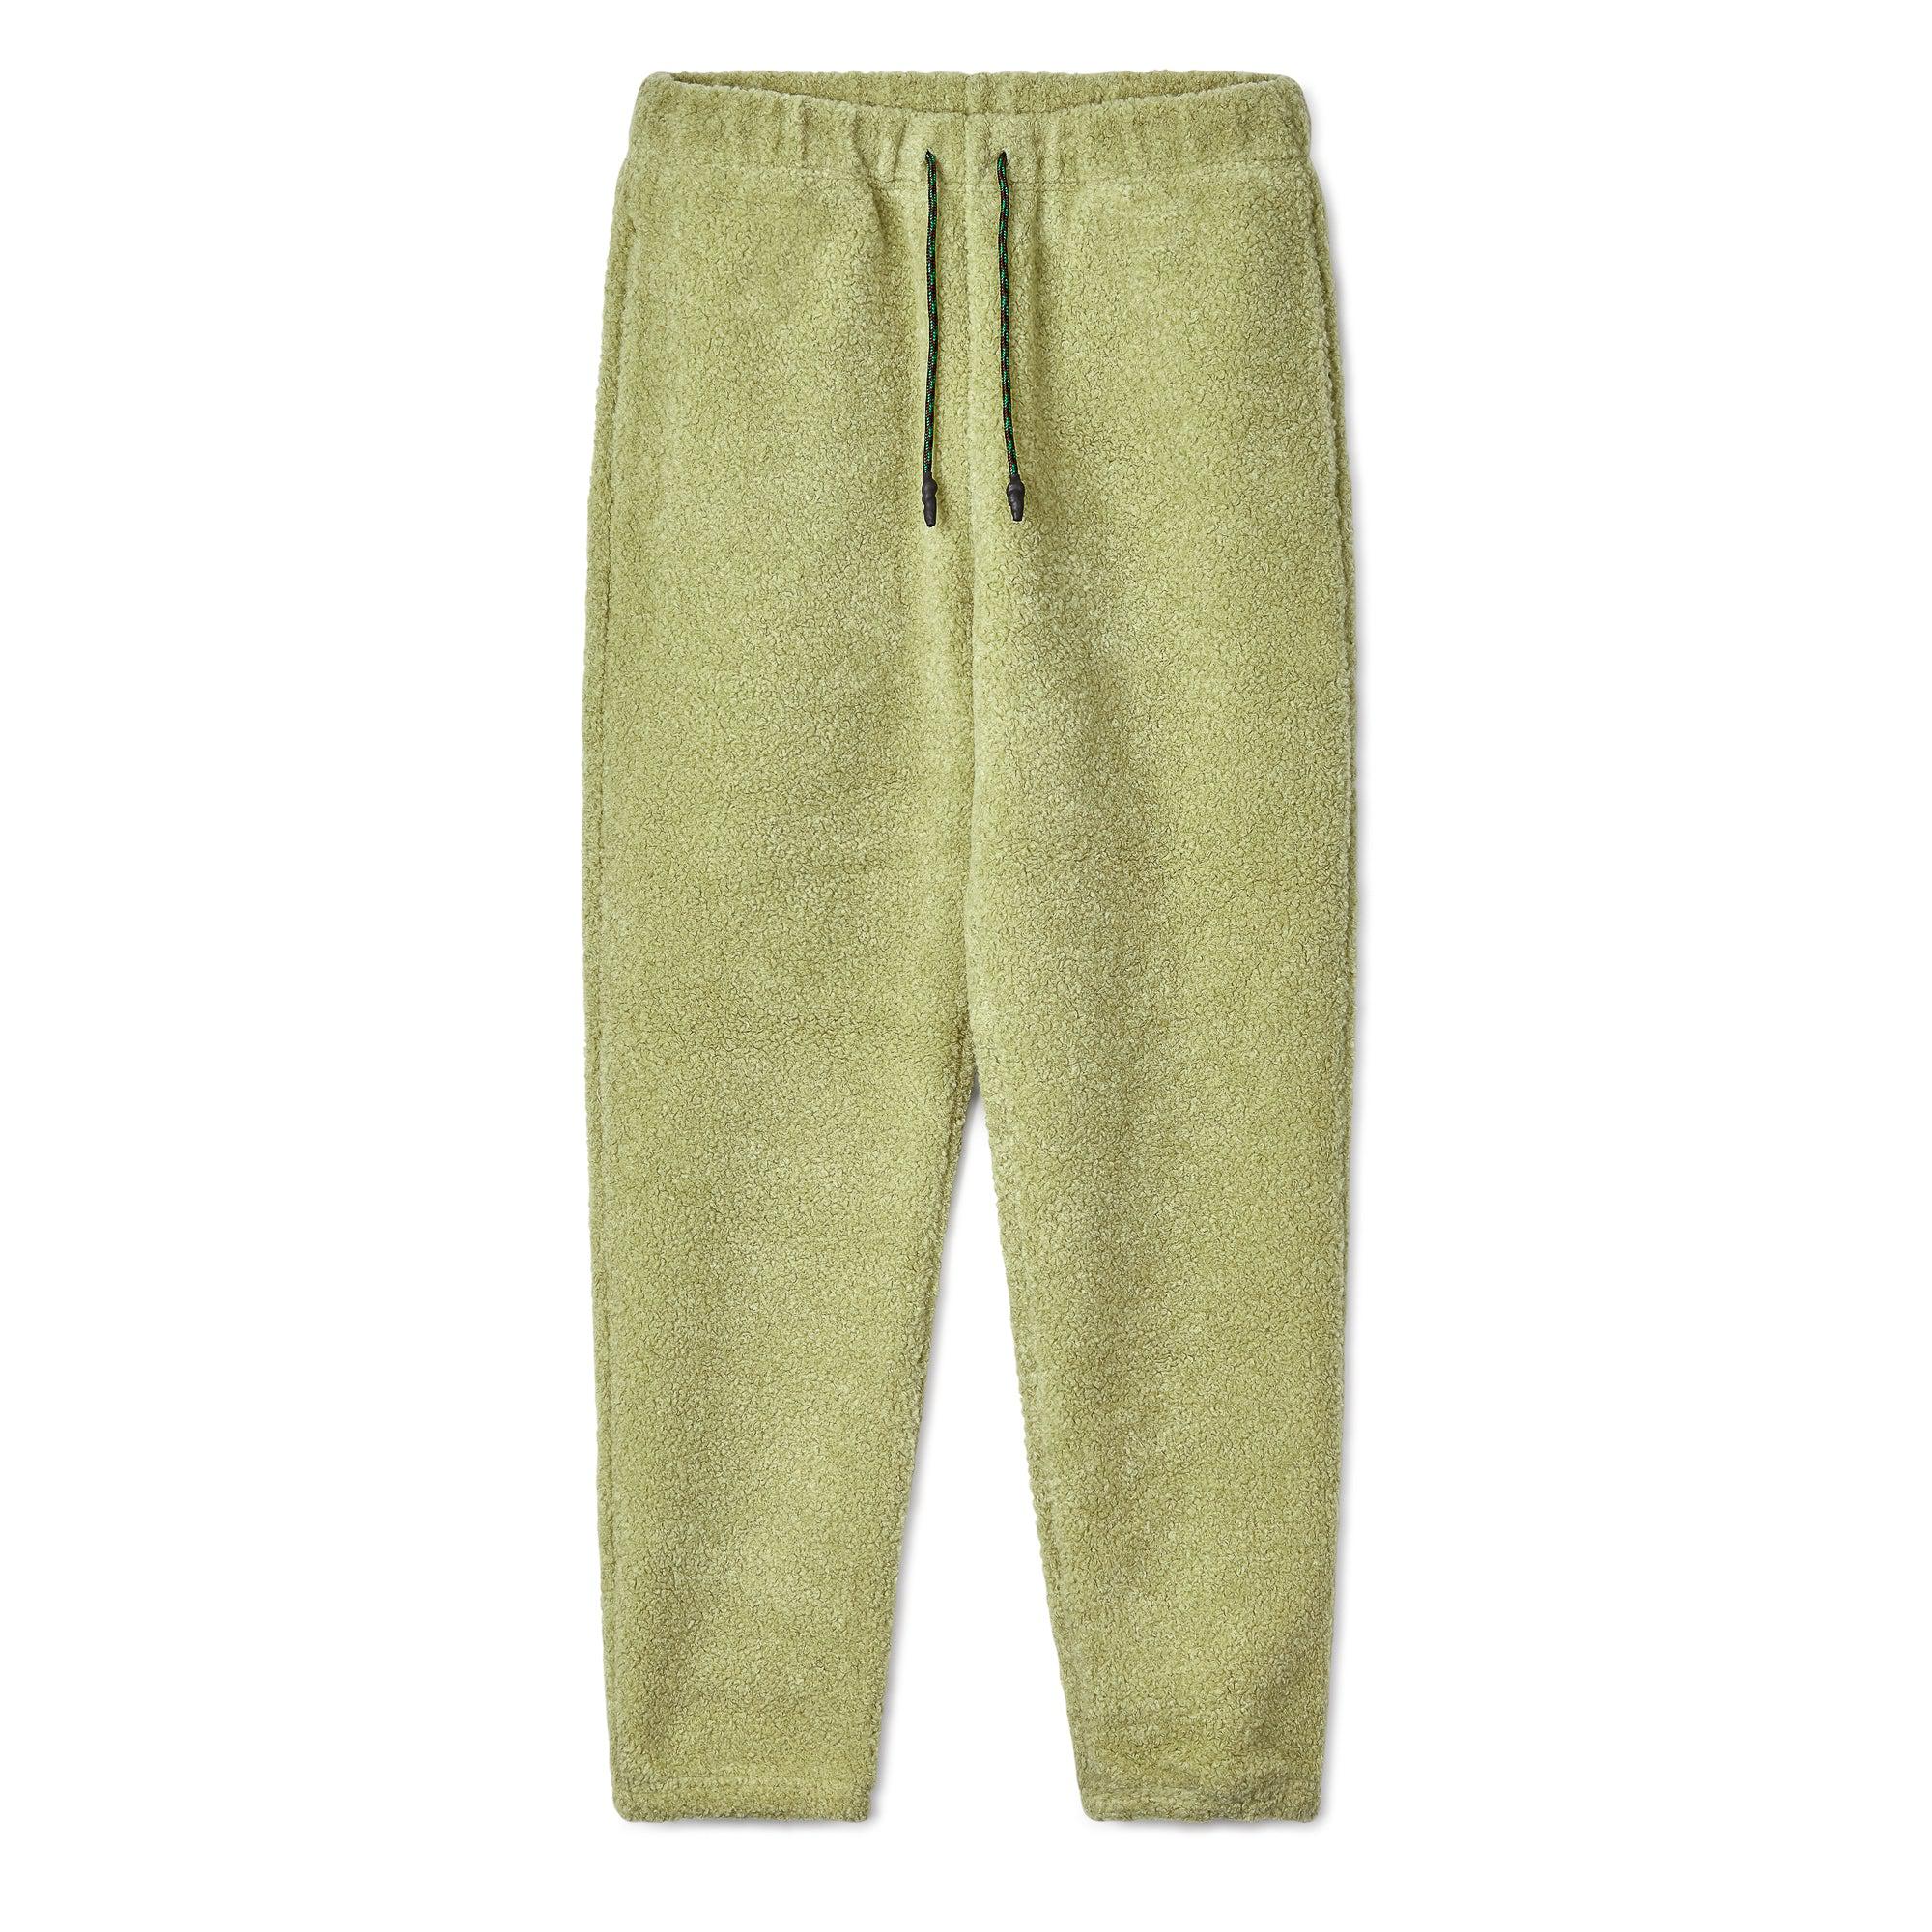 Clot Men's Sheep Boa Pile Sweatpants (Green) by CLOT